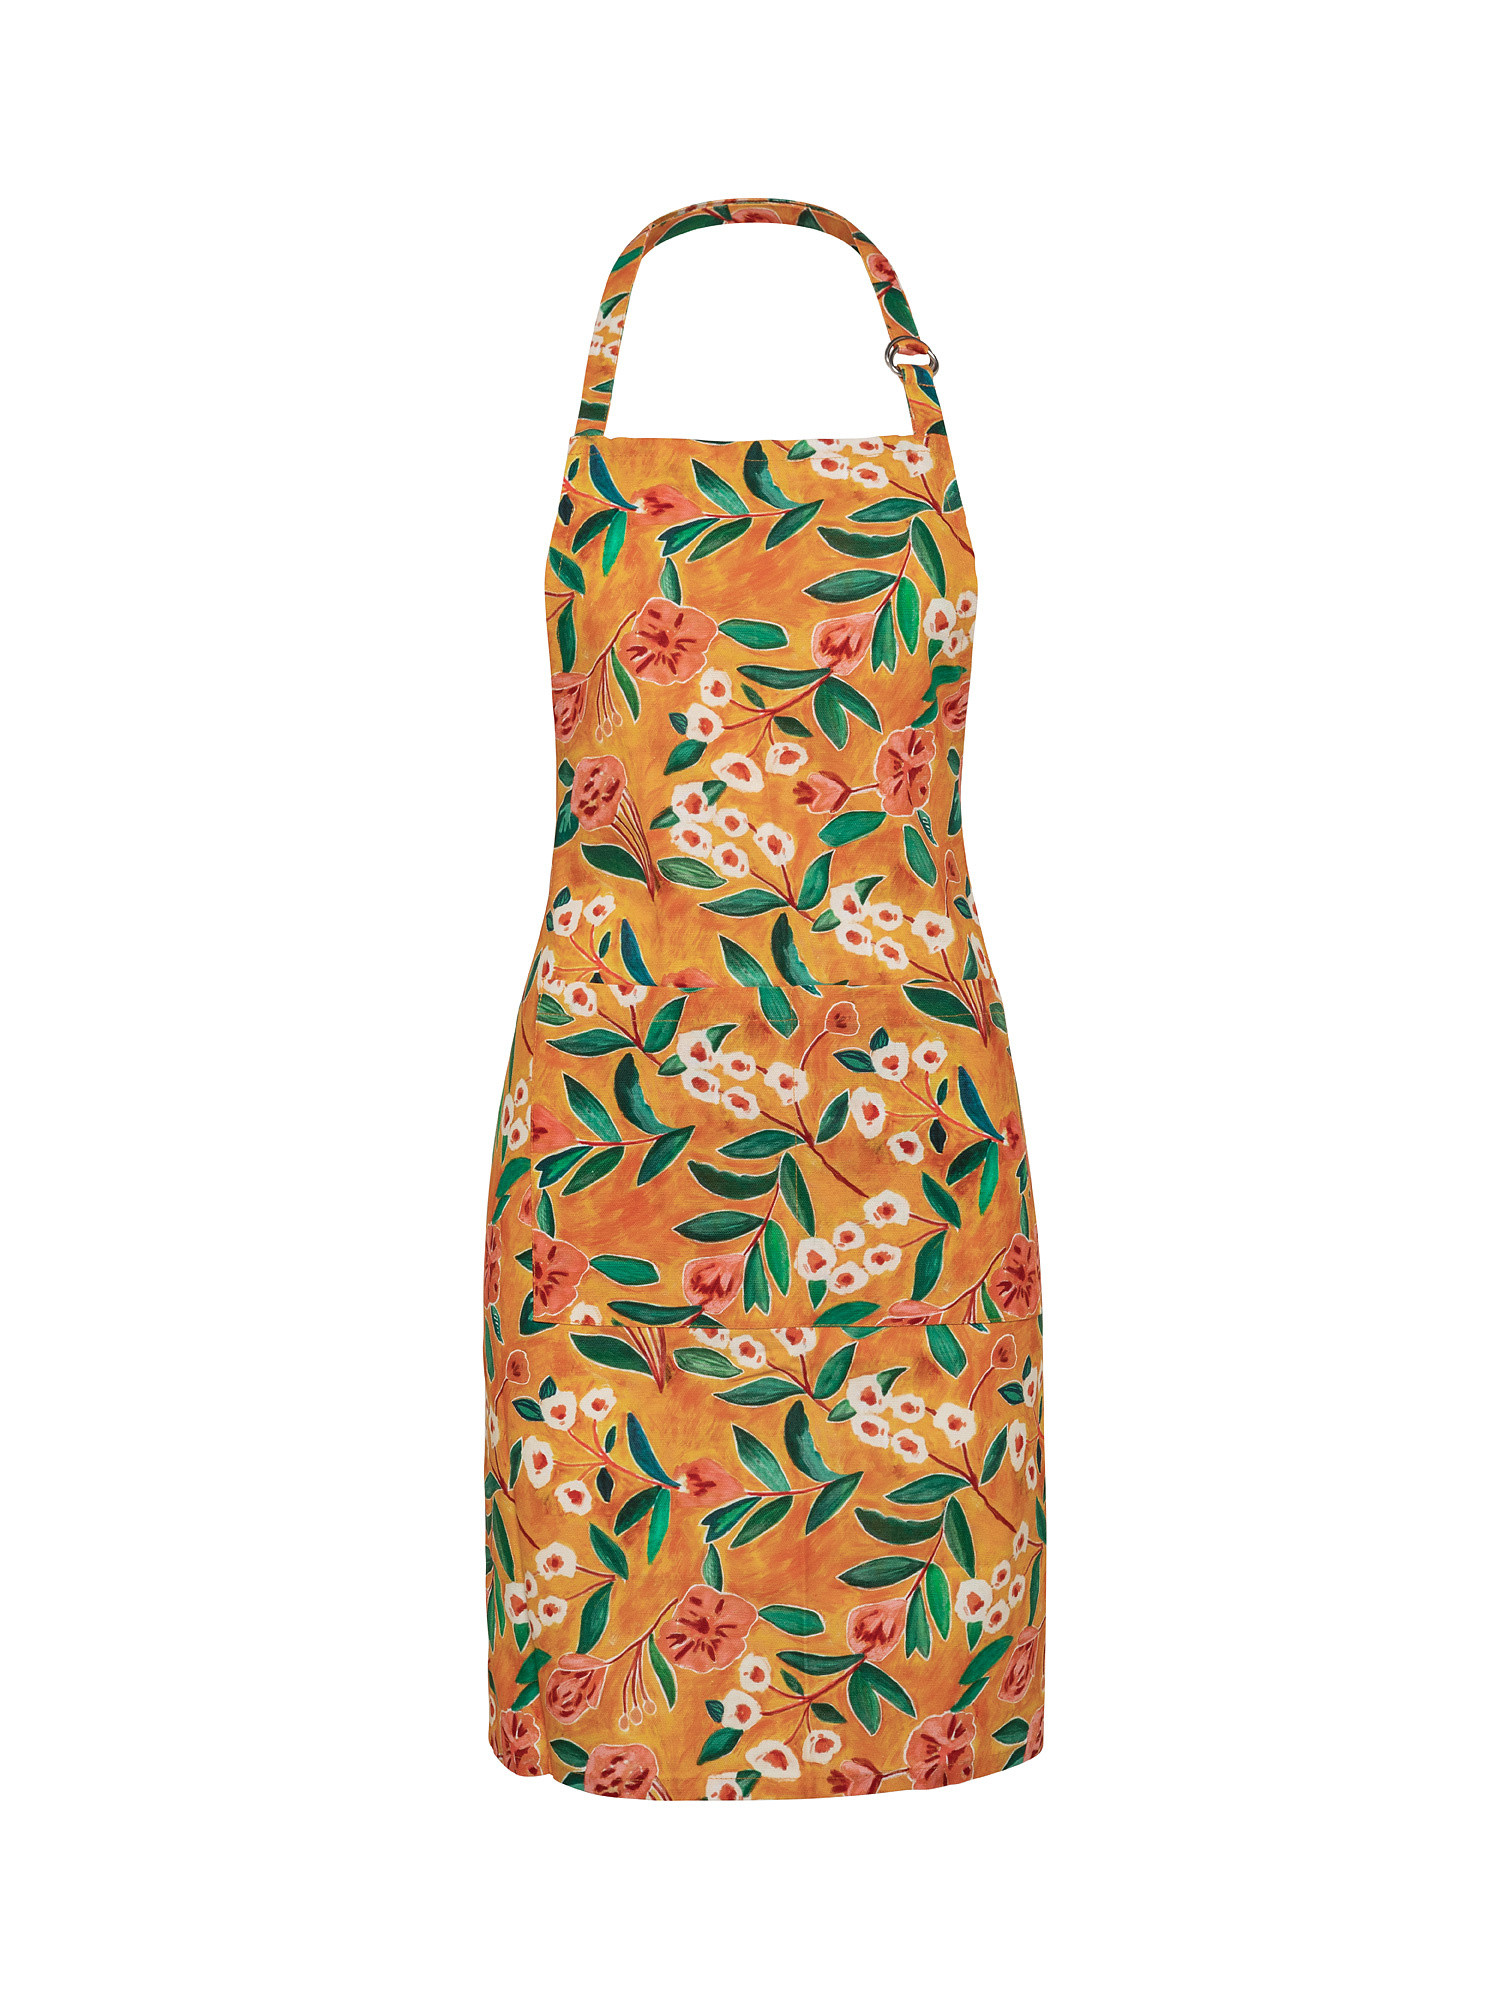 Grembiule da cucina puro cotone stampa digitale floreale, Arancione, large image number 0